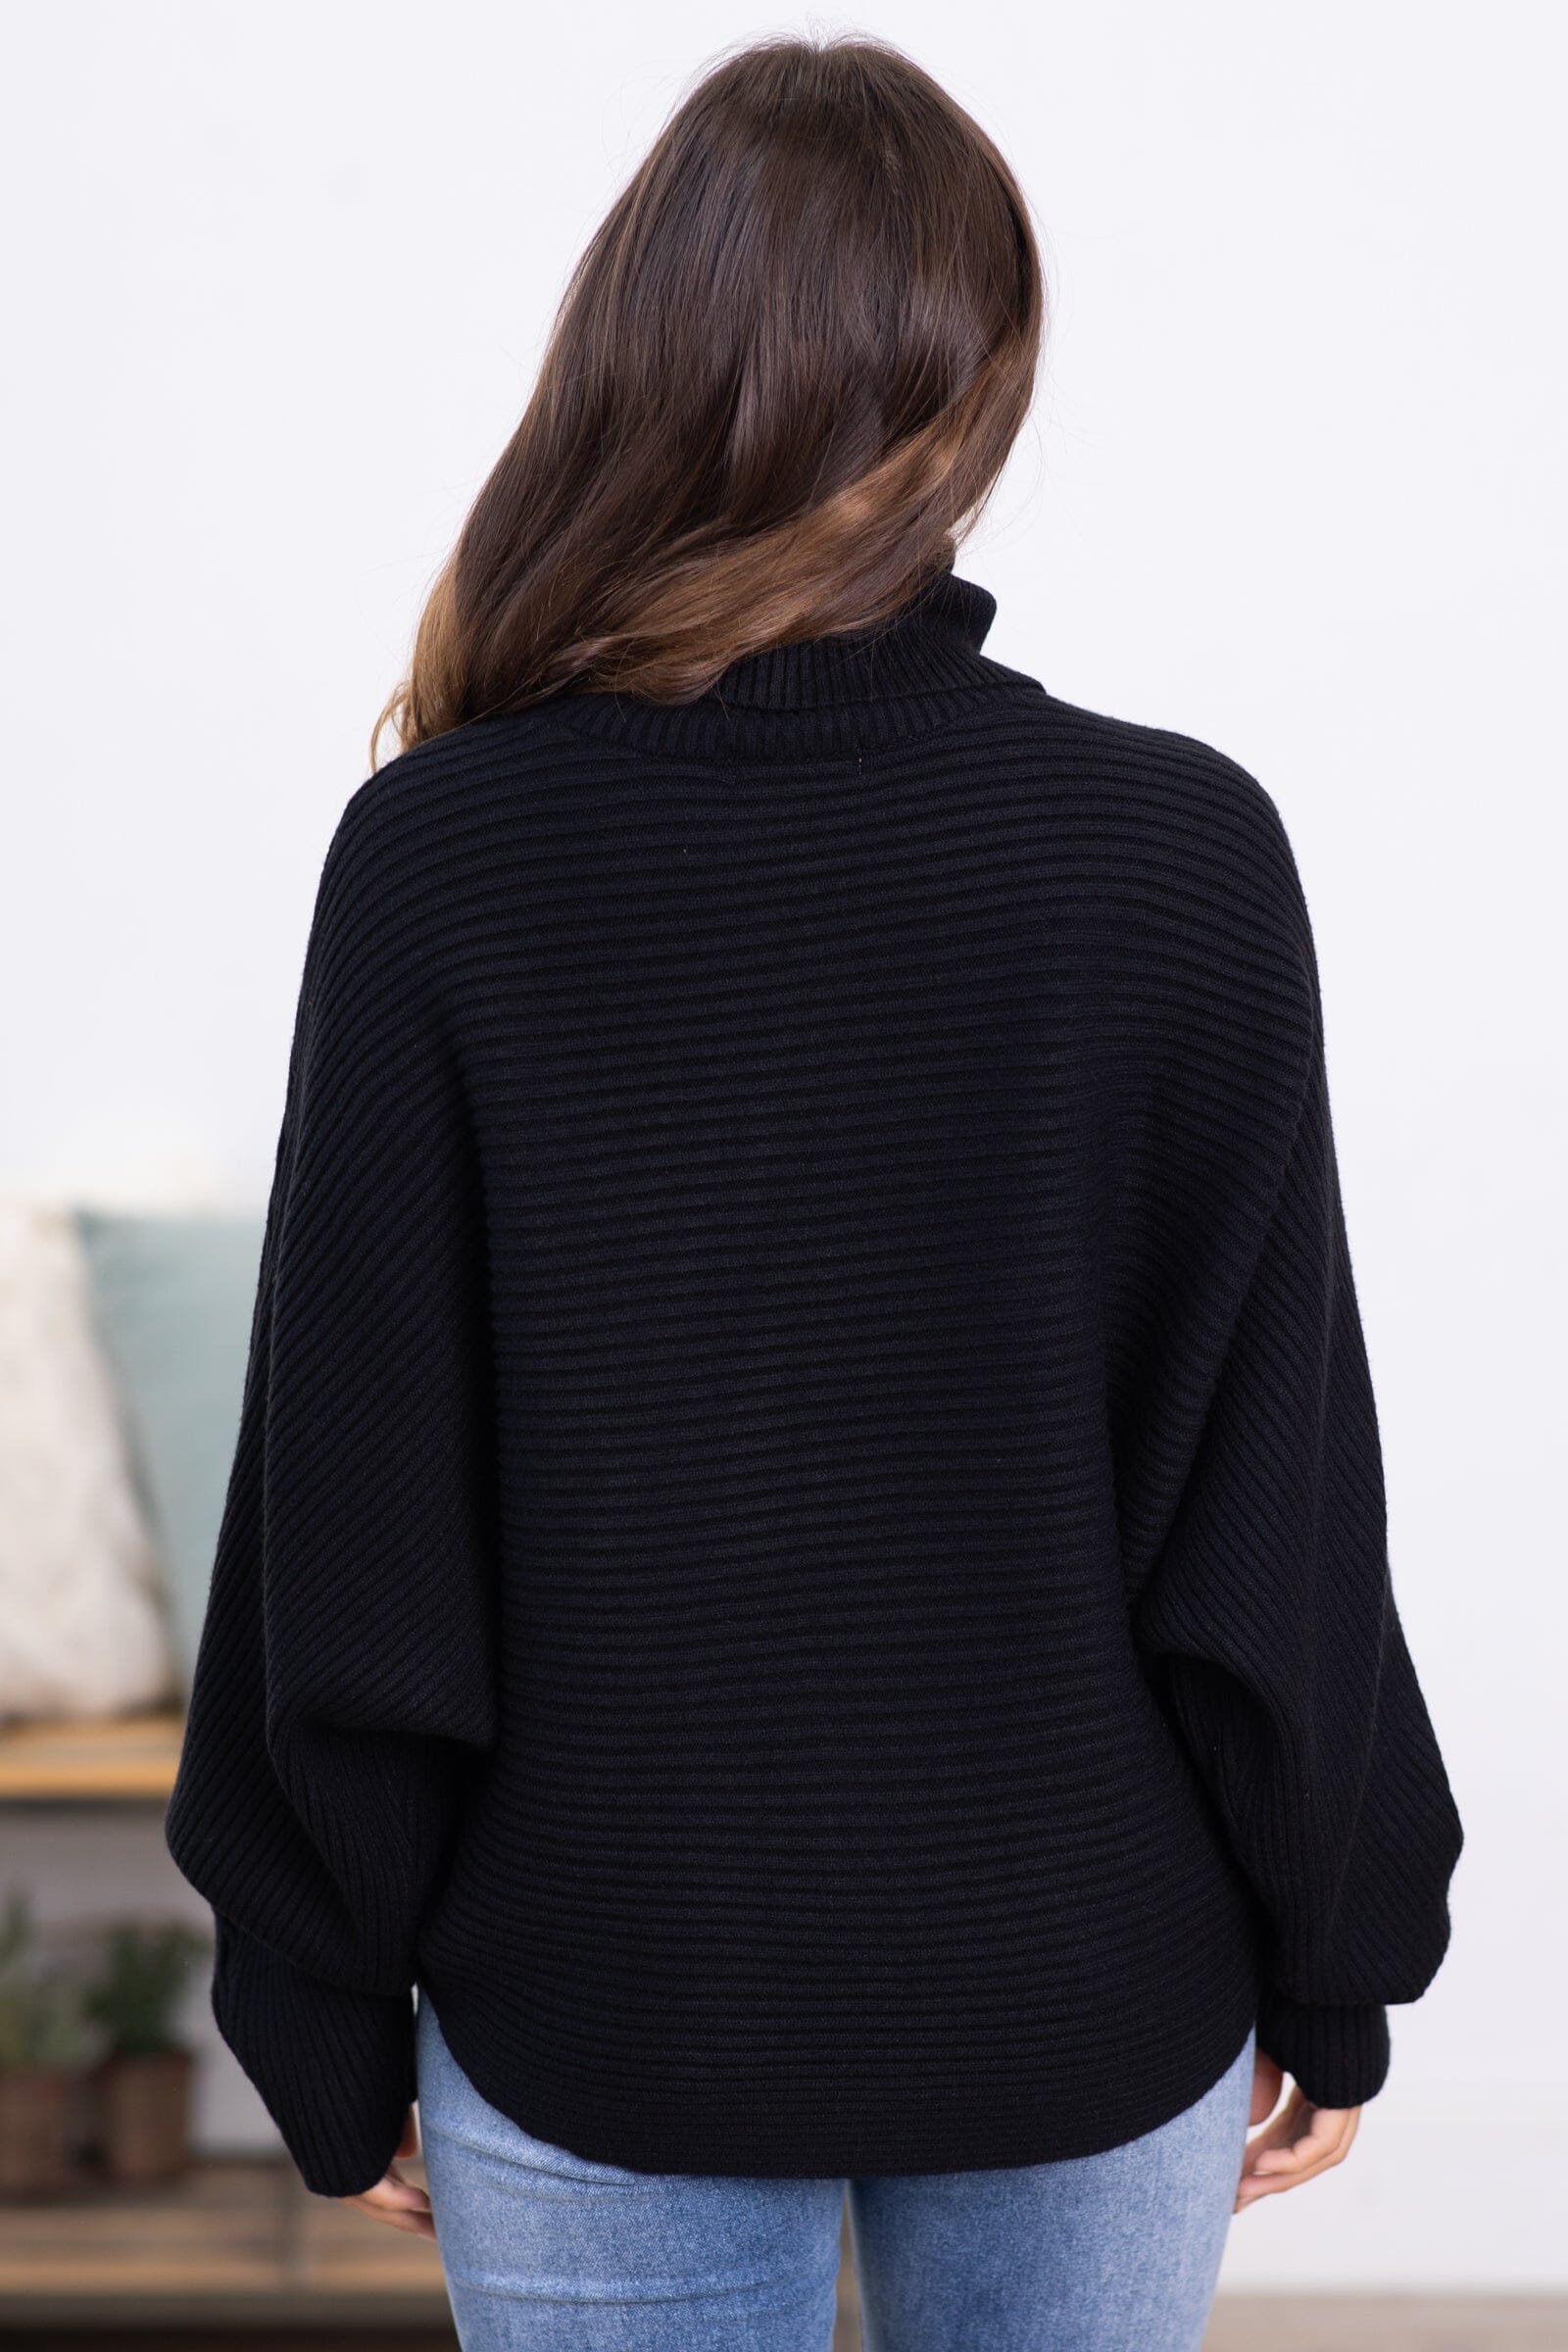 Black Horizontal Ribbed Turtleneck Sweater - Filly Flair